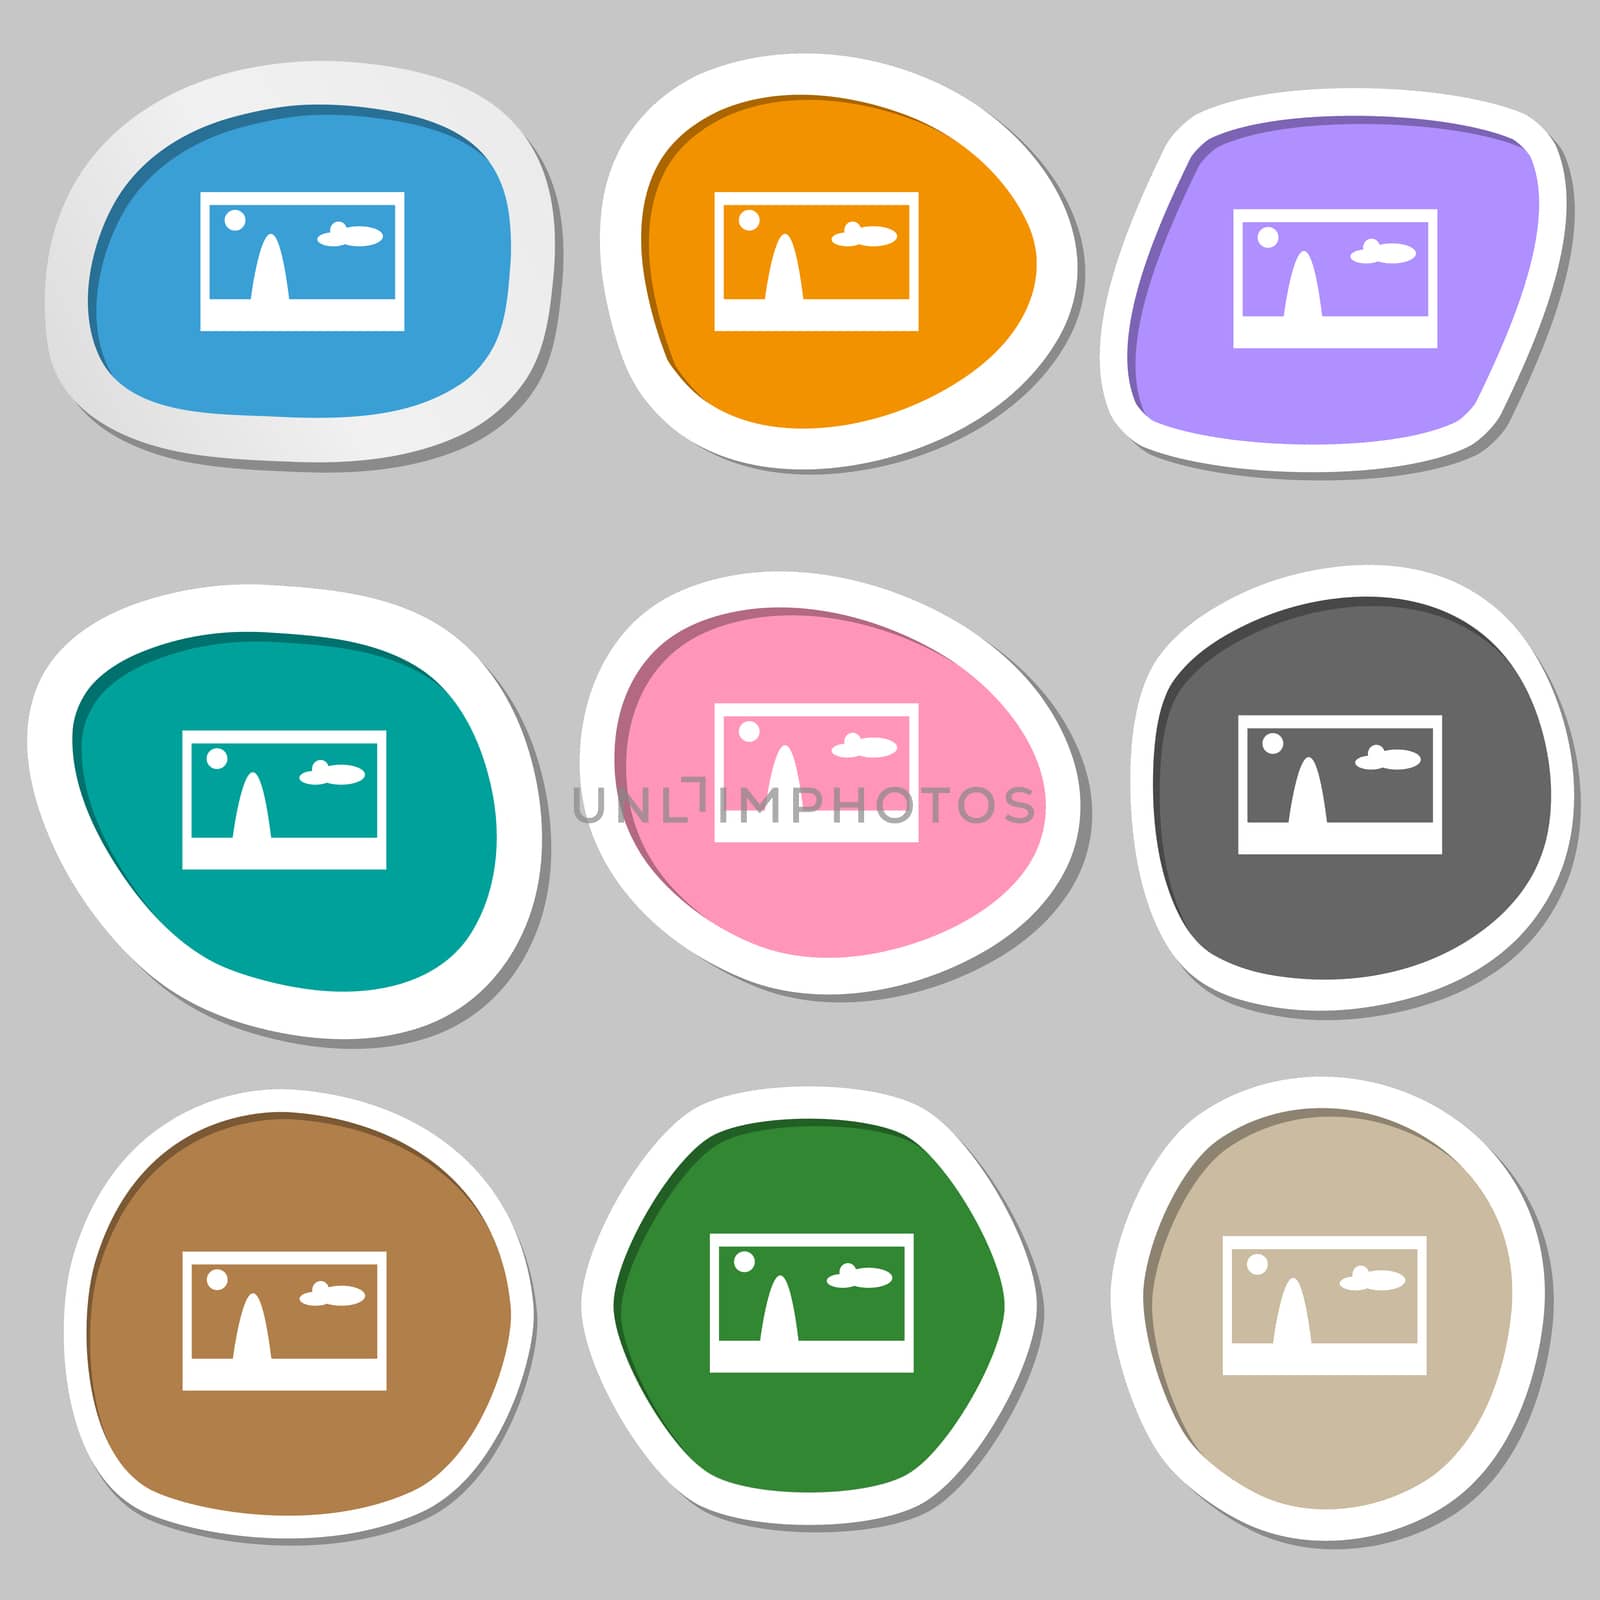 File JPG sign icon. Download image file symbol. Multicolored paper stickers. illustration